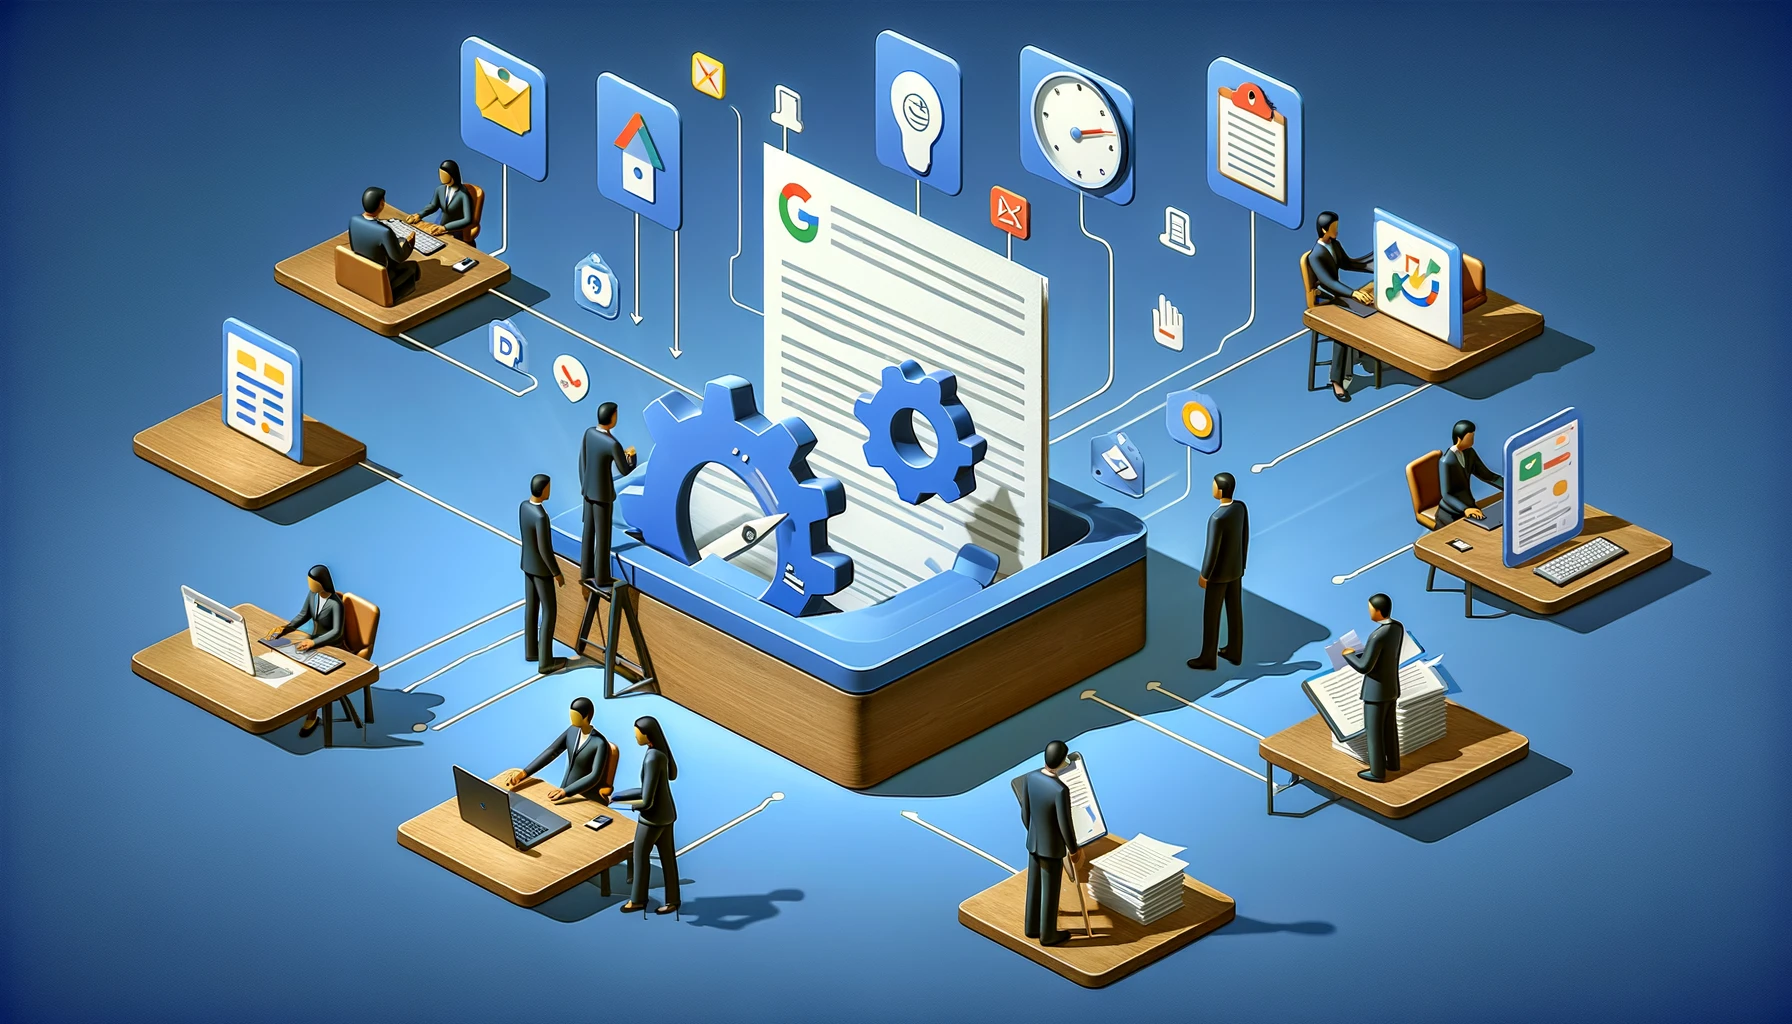 Google Docs Automation: Enhancing Productivity Through Smart Workflows